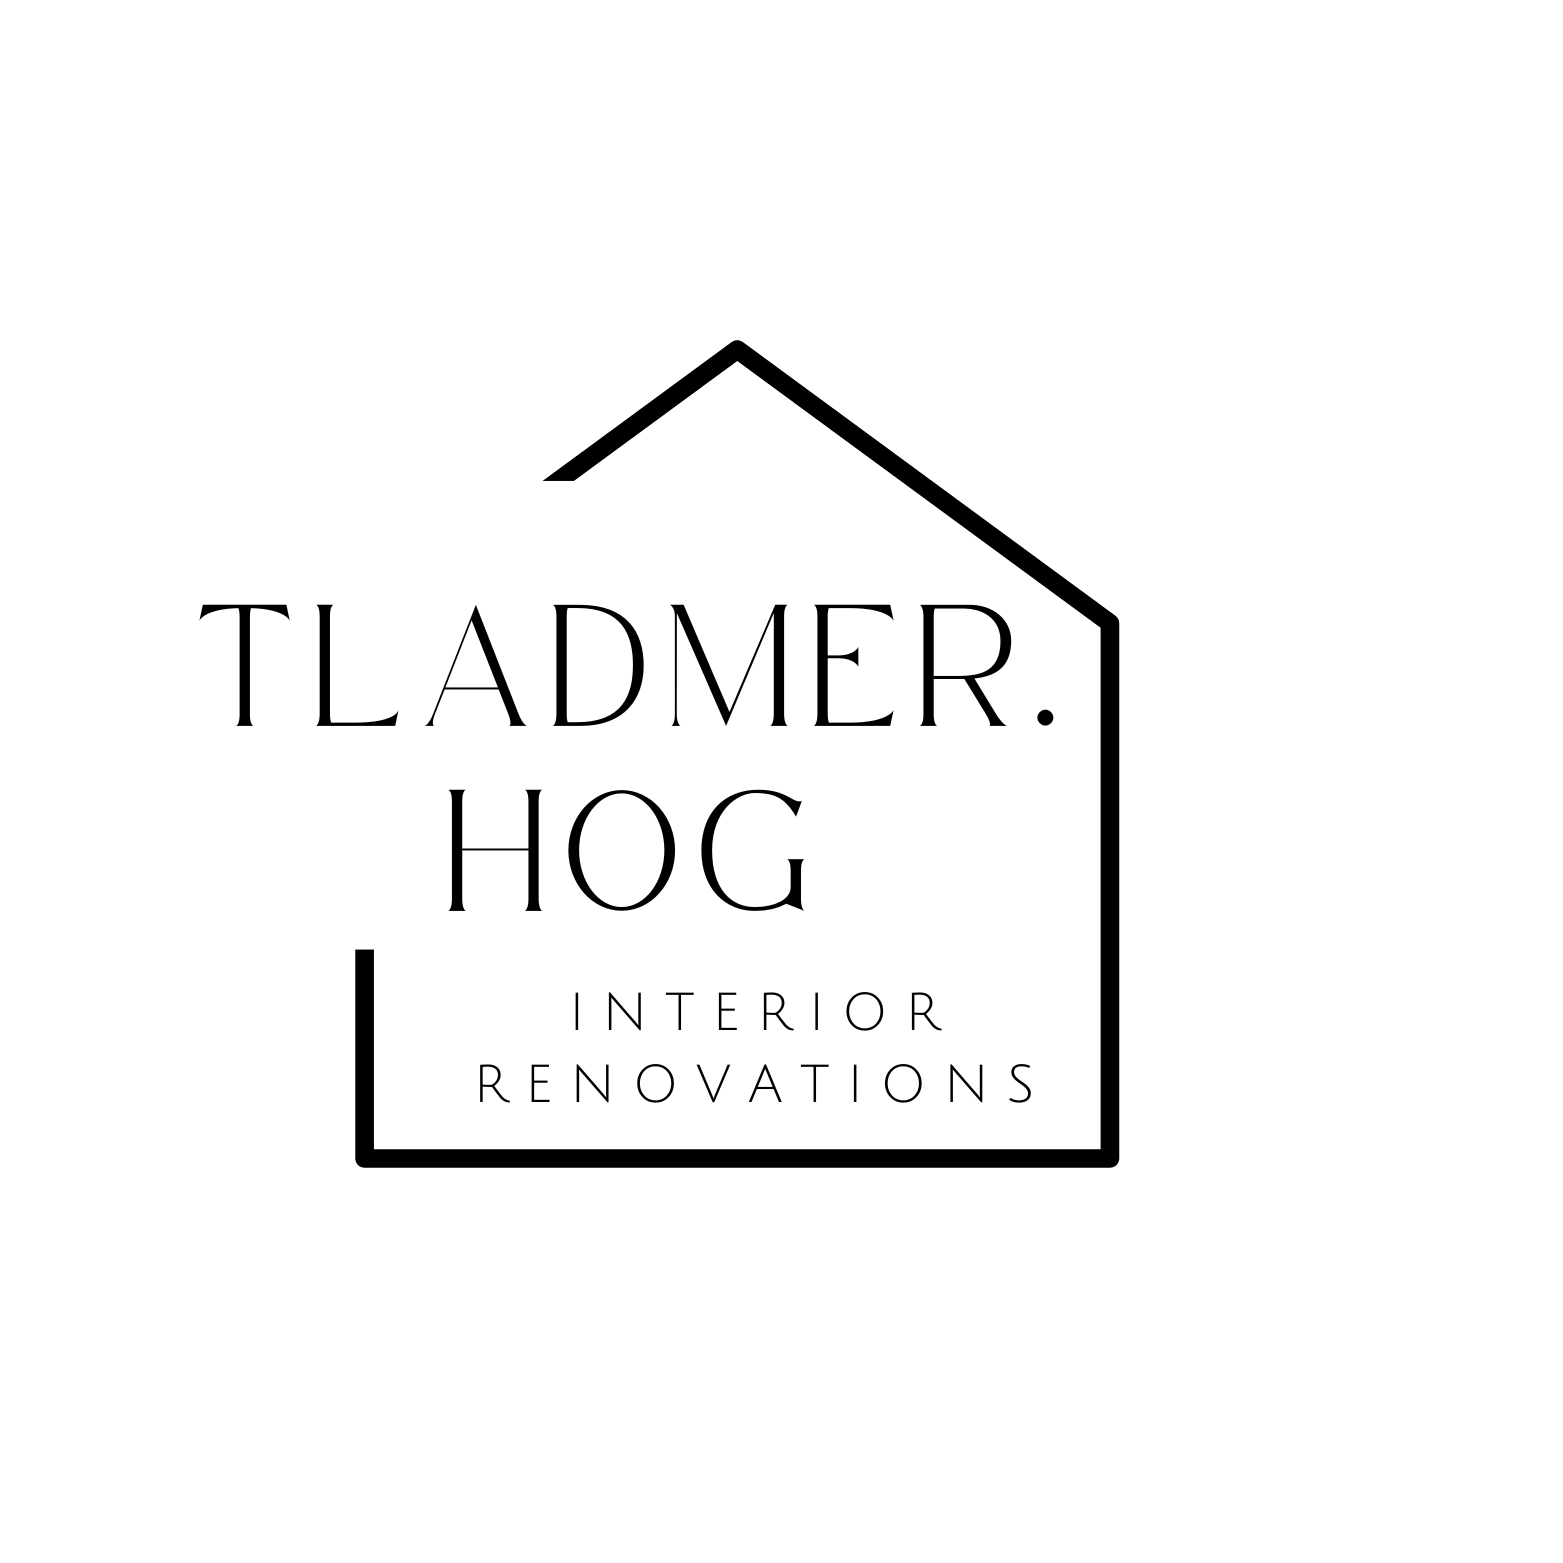 Tladmer.hog's logo